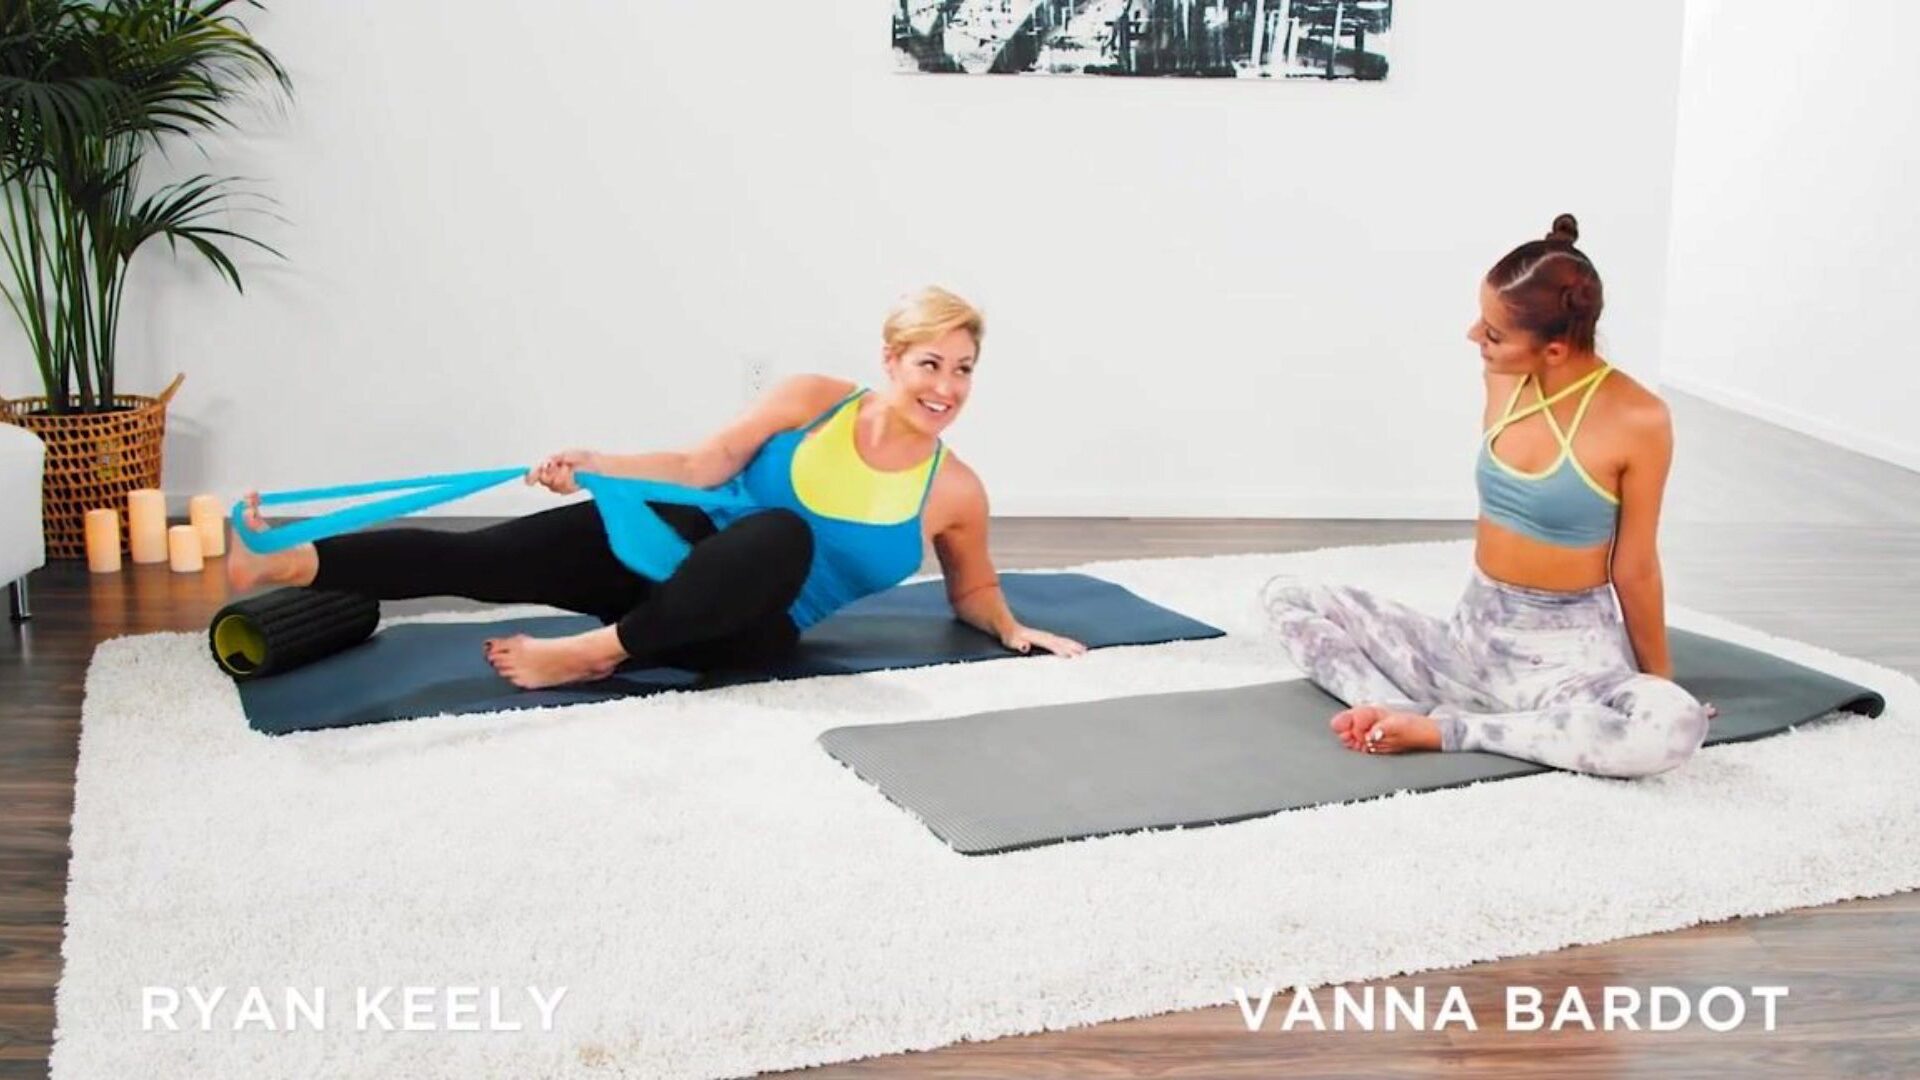 mommysgirl vanna bardot ha un allenamento di yoga con diteggiatura hardcore con la calda milf ryan keely